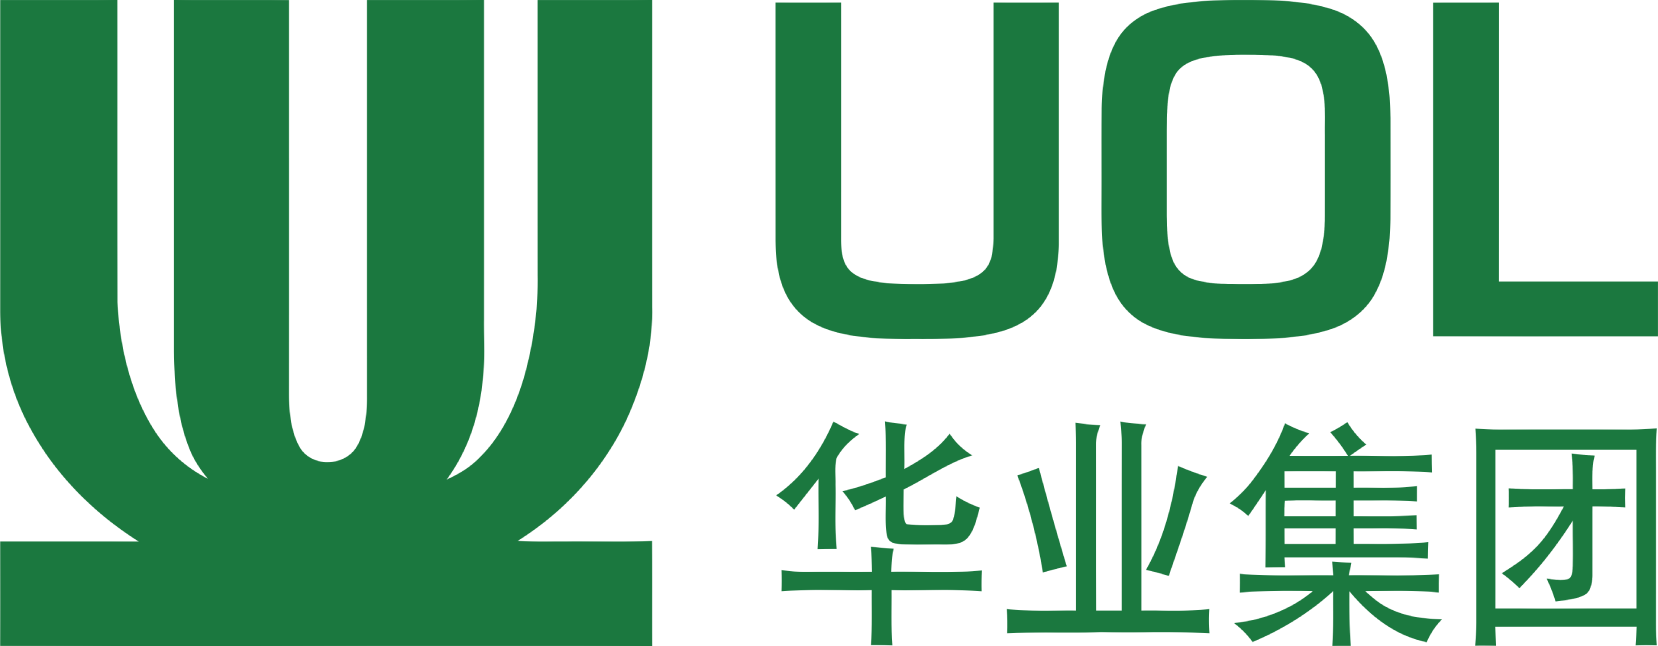 UOL Group logo large (transparent PNG)